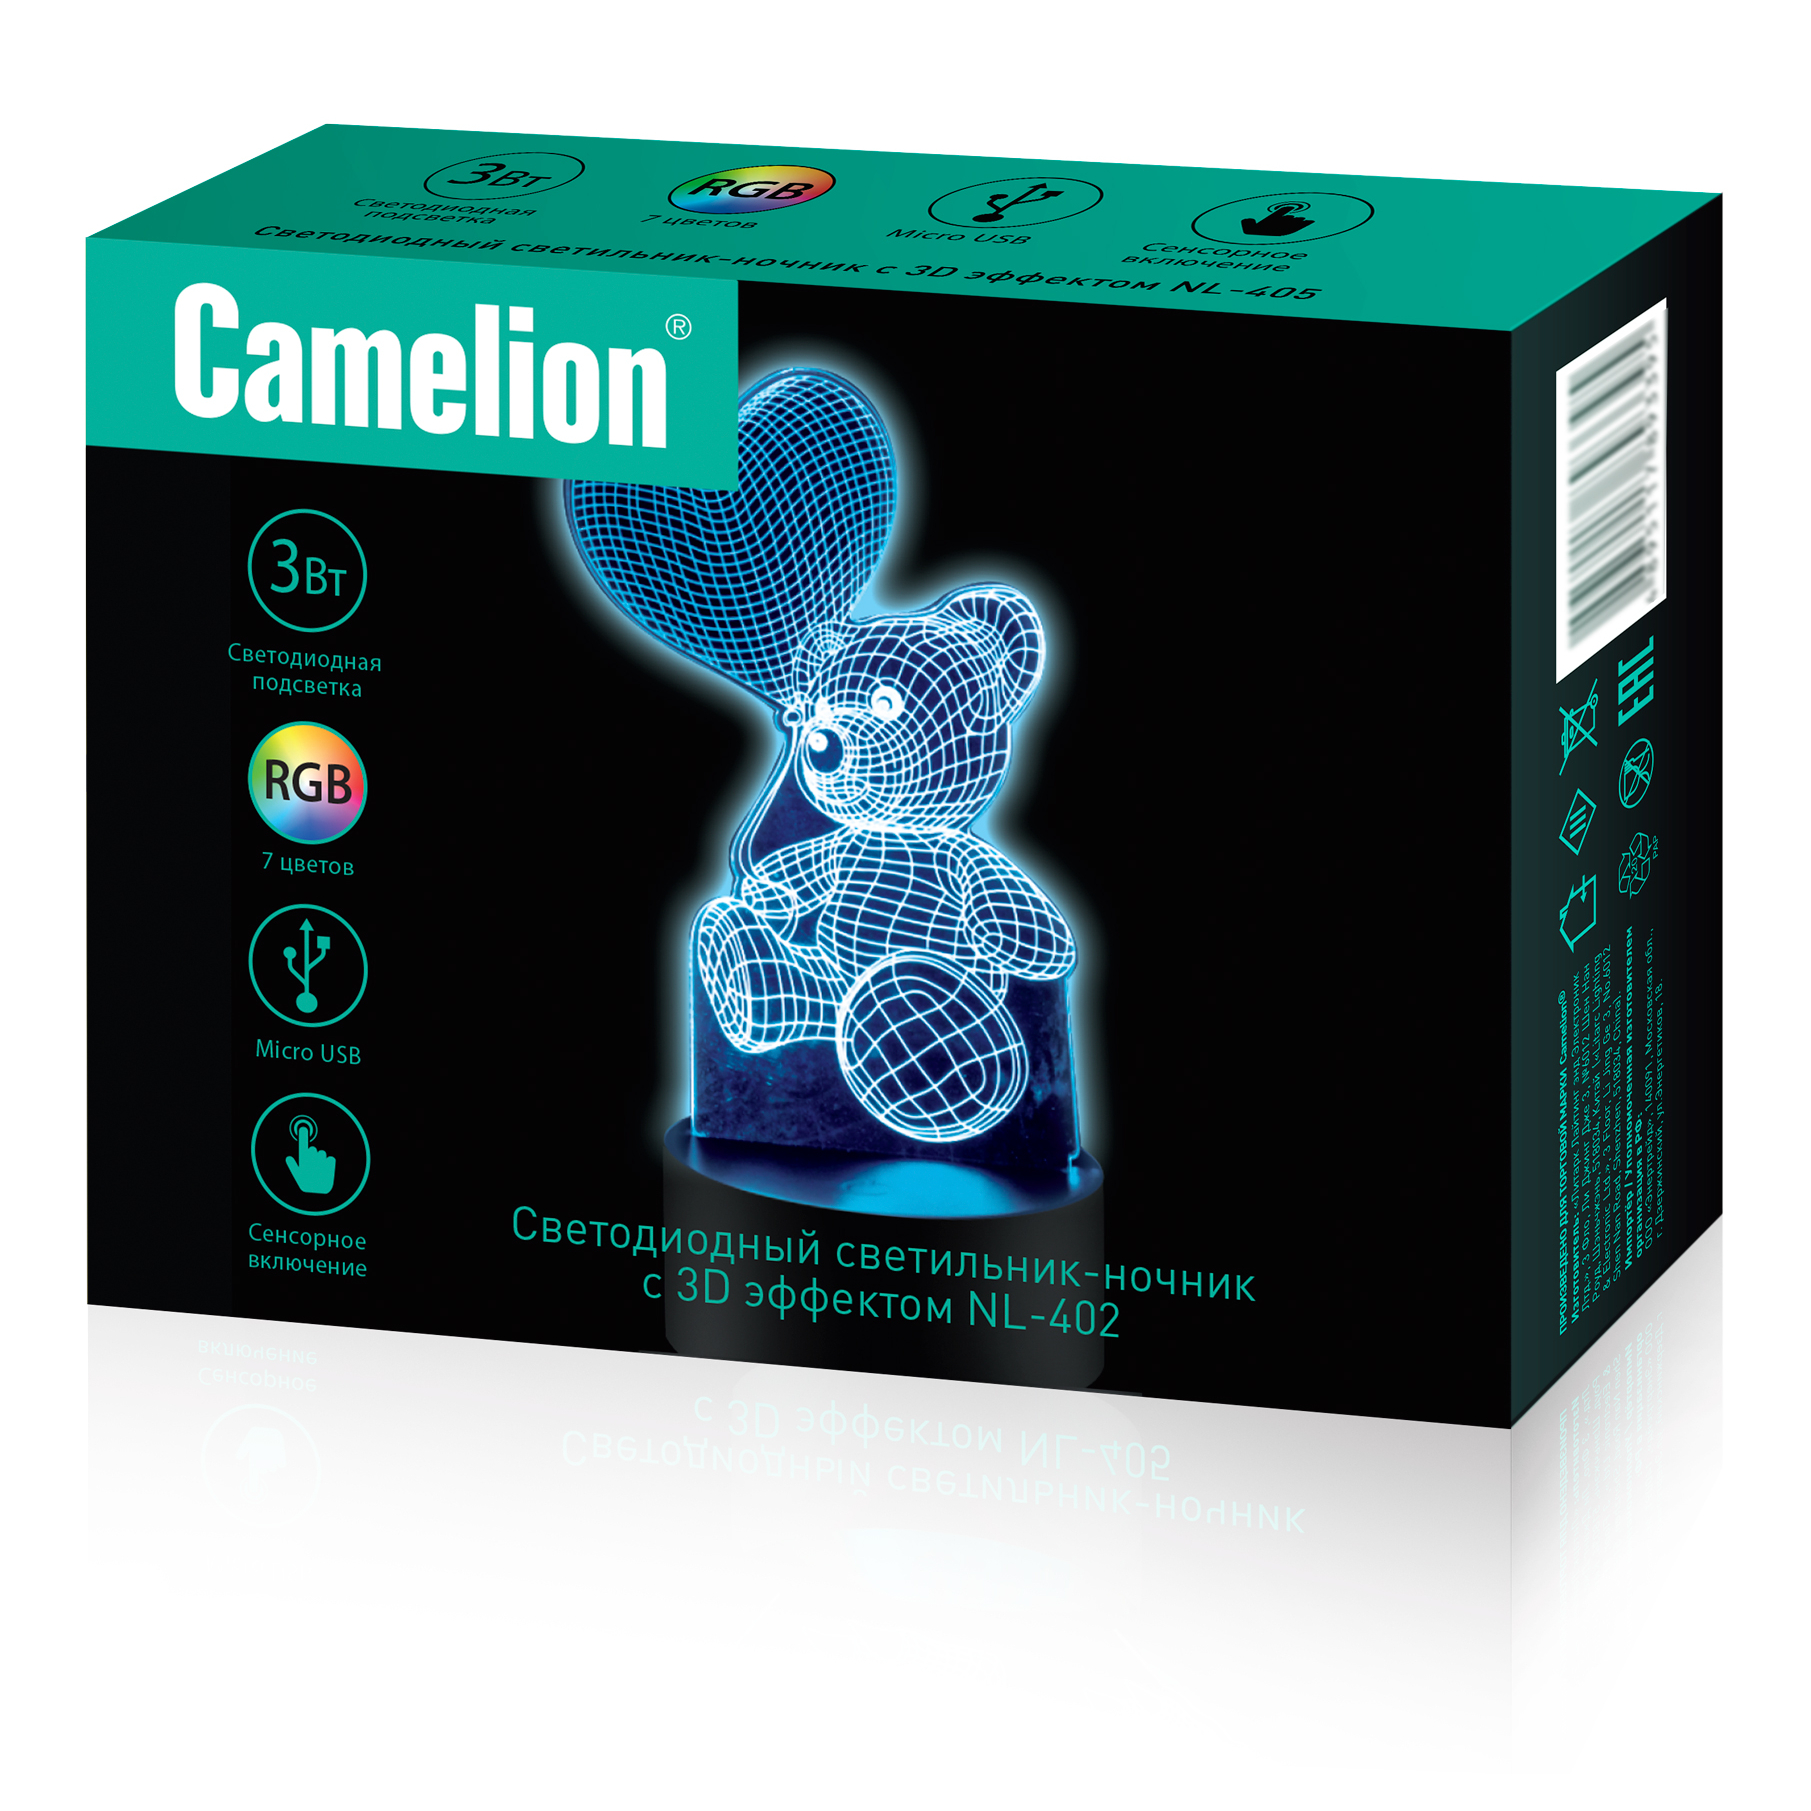 Camelion NL-402 (Led наст. свет-к, 3Вт, RGB, USB)